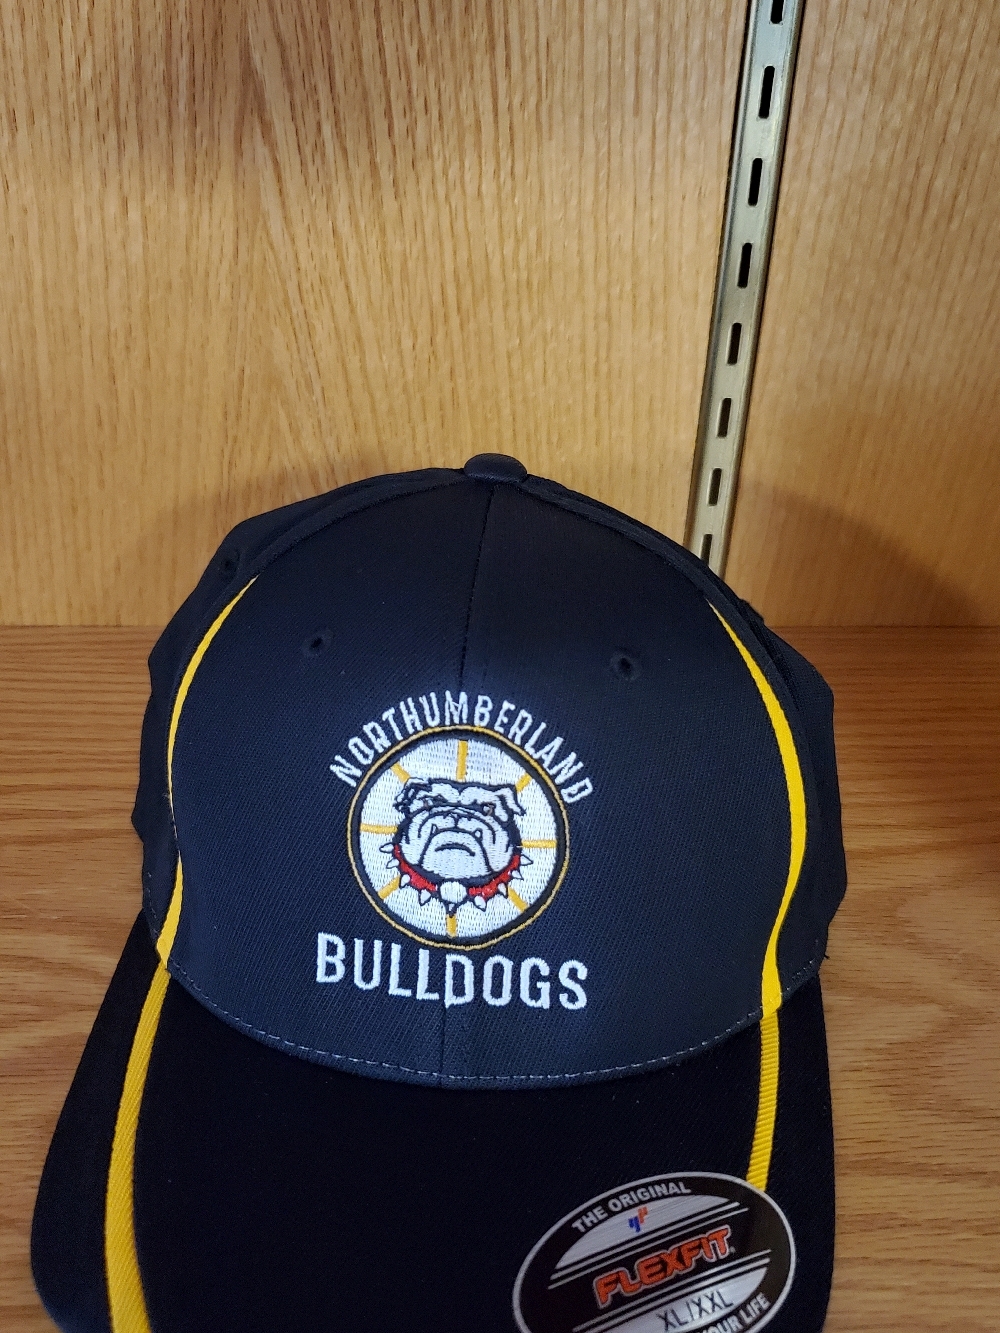 Northumberland Bulldogs Memorabilia